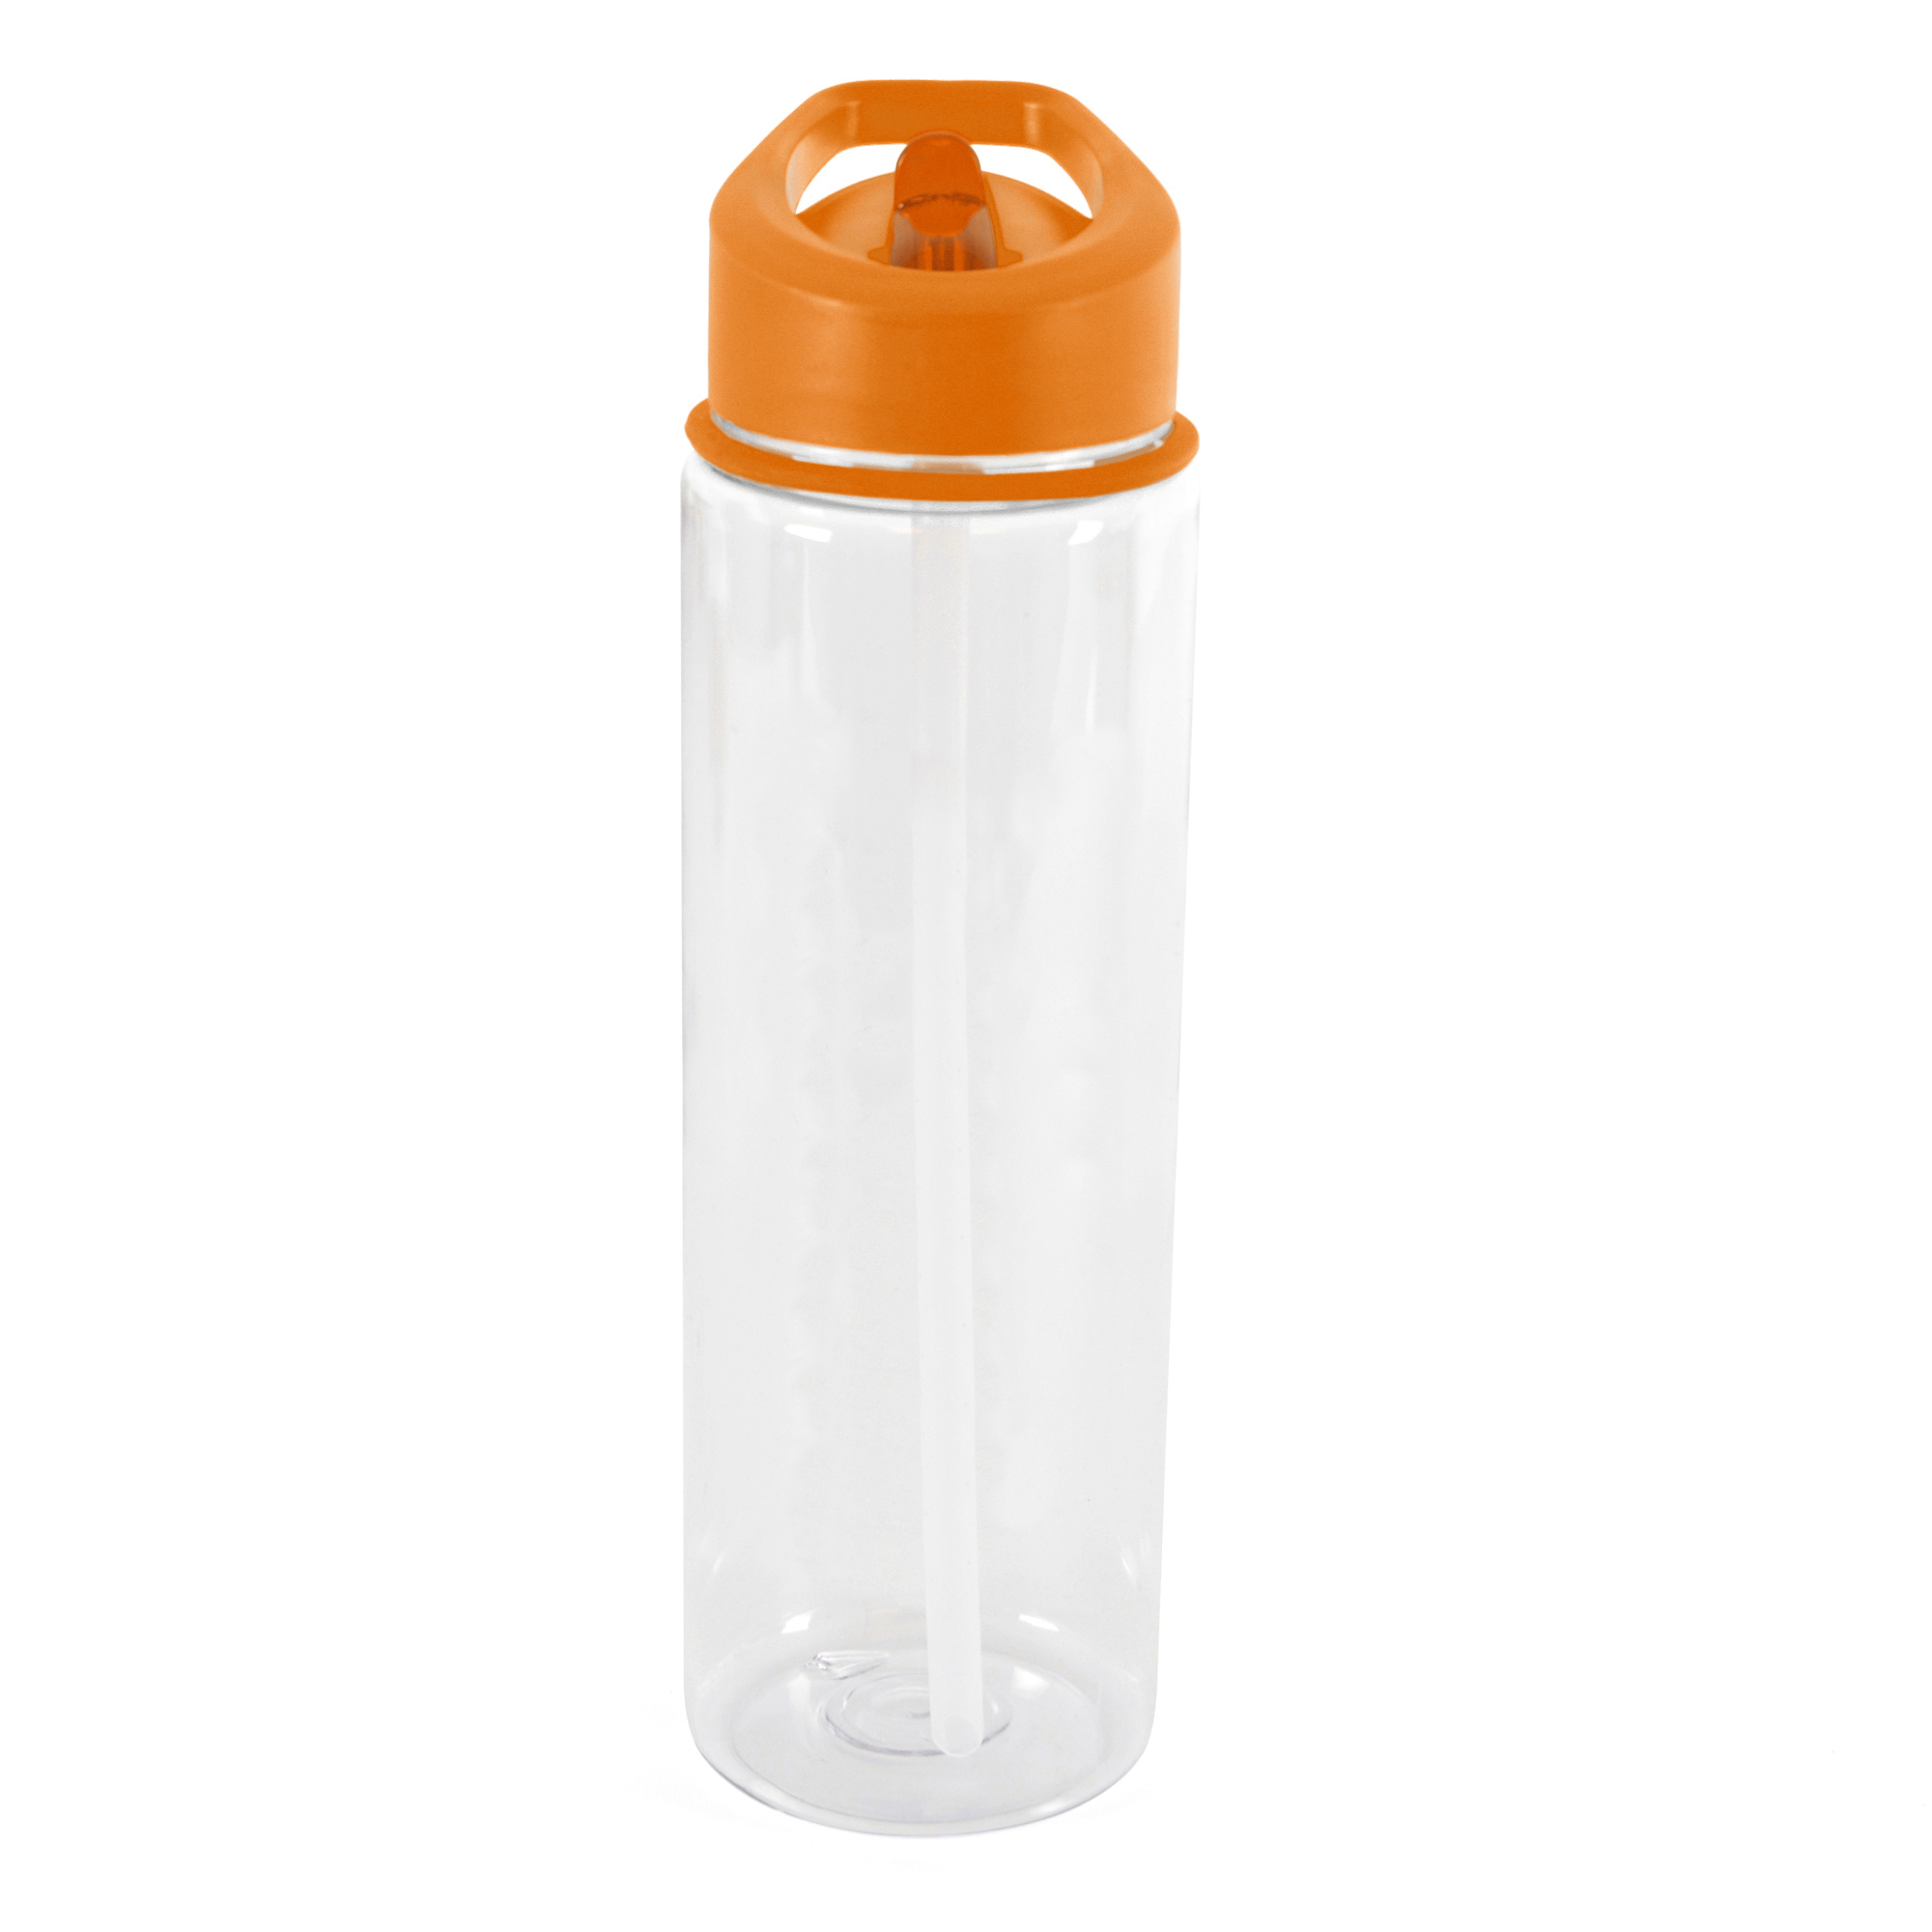 MG9605AM - Tarn 750ml Promotional PET Plastic Sports Bottle